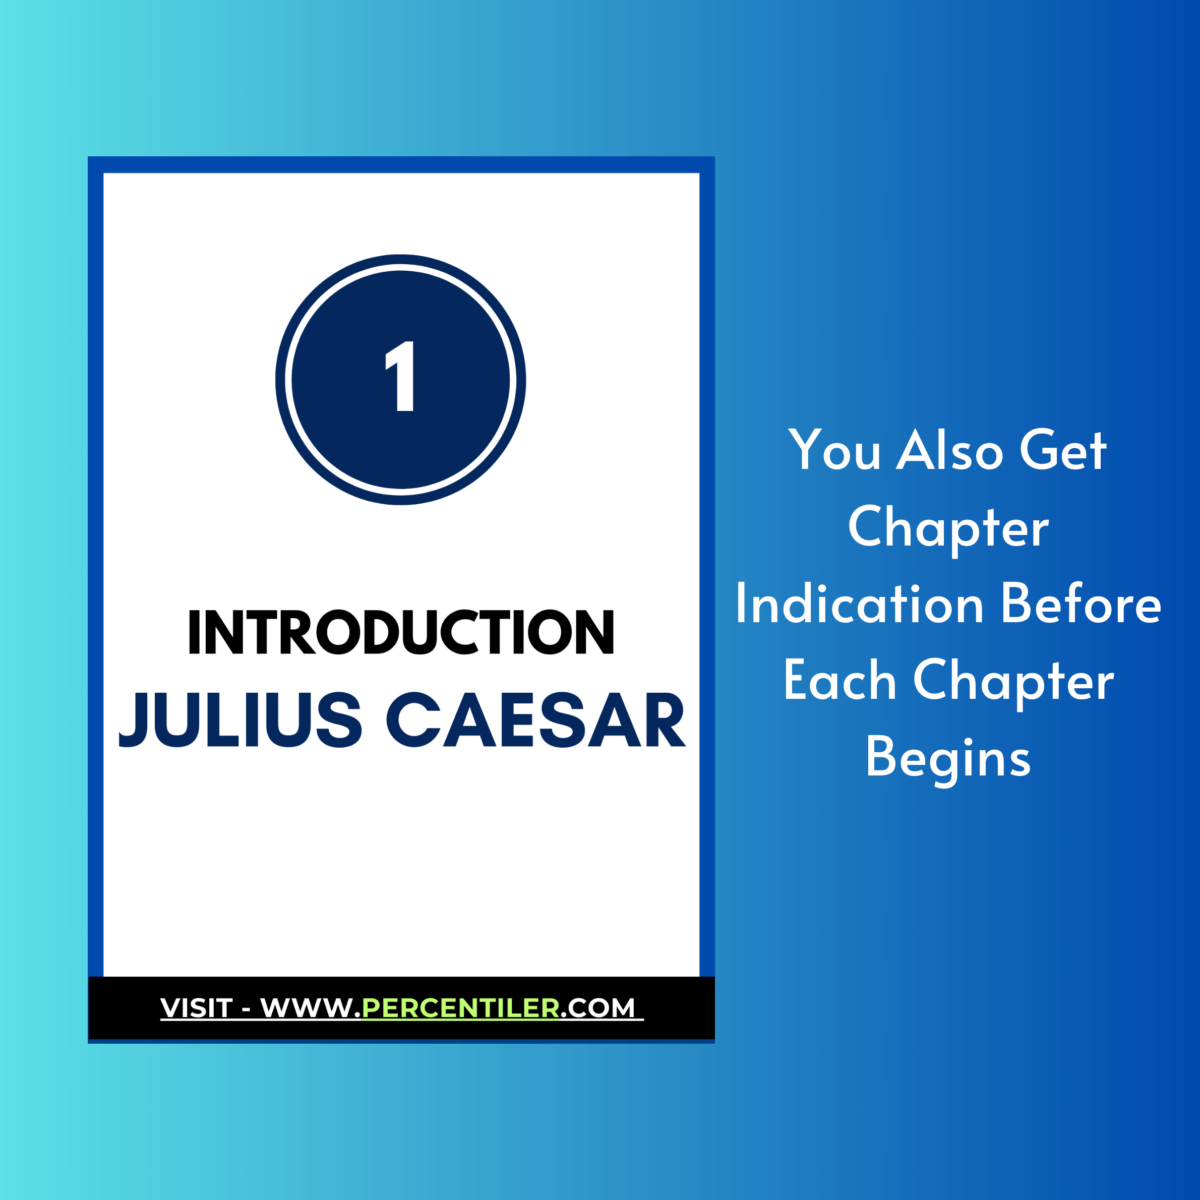 julius caesar guide book